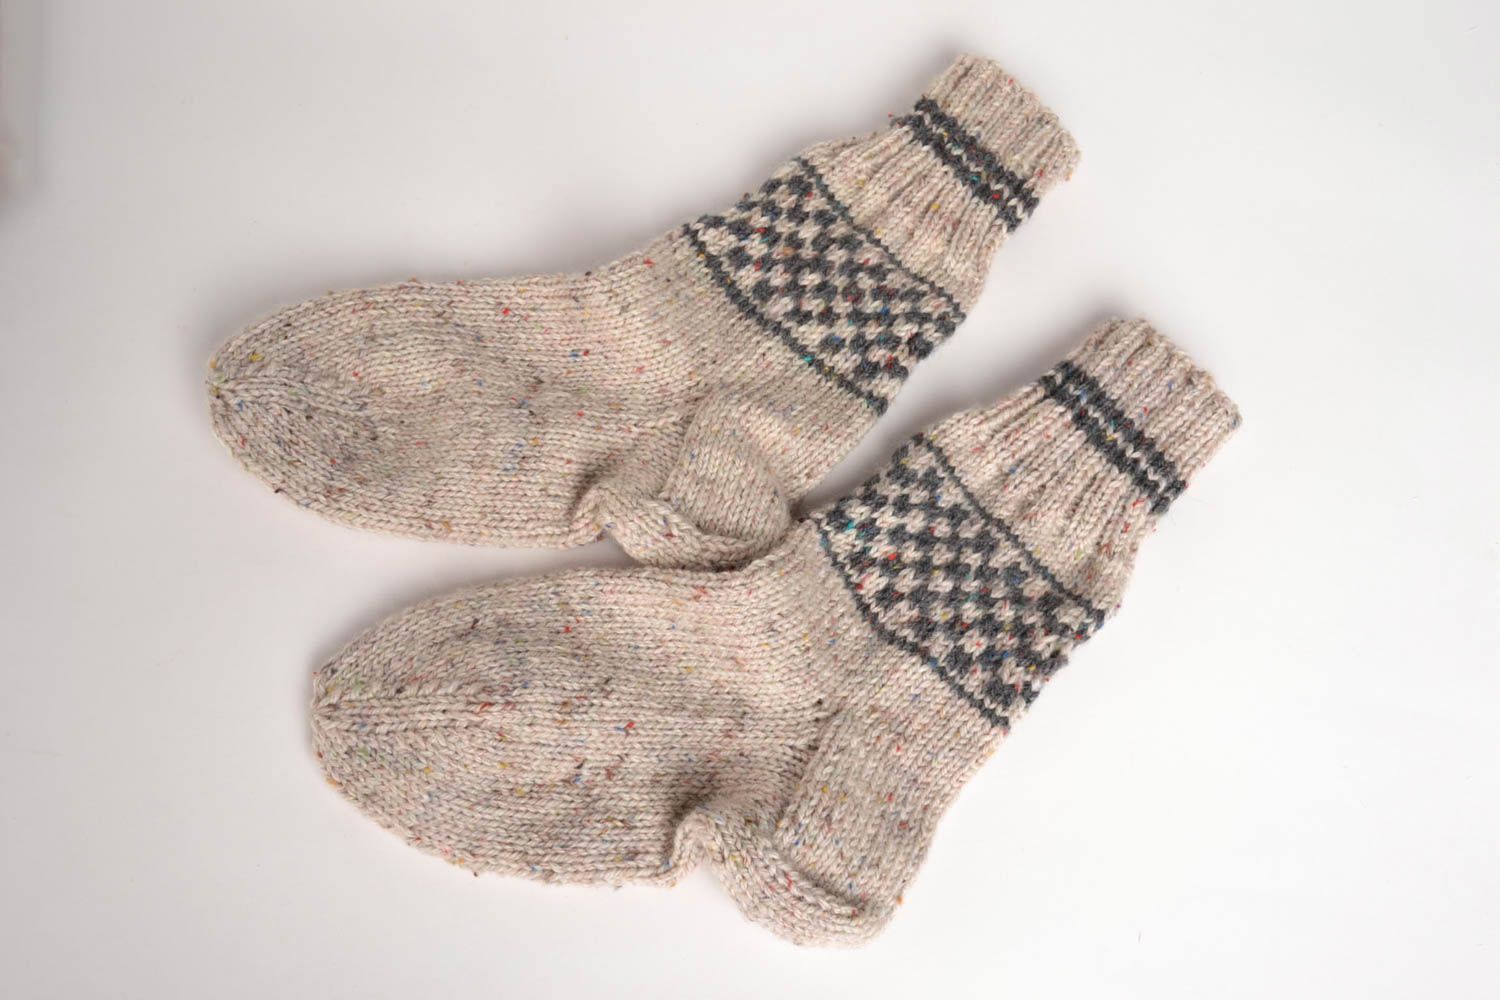 Comfortable handmade woolen socks knitted wool socks for men best gifts for him photo 2